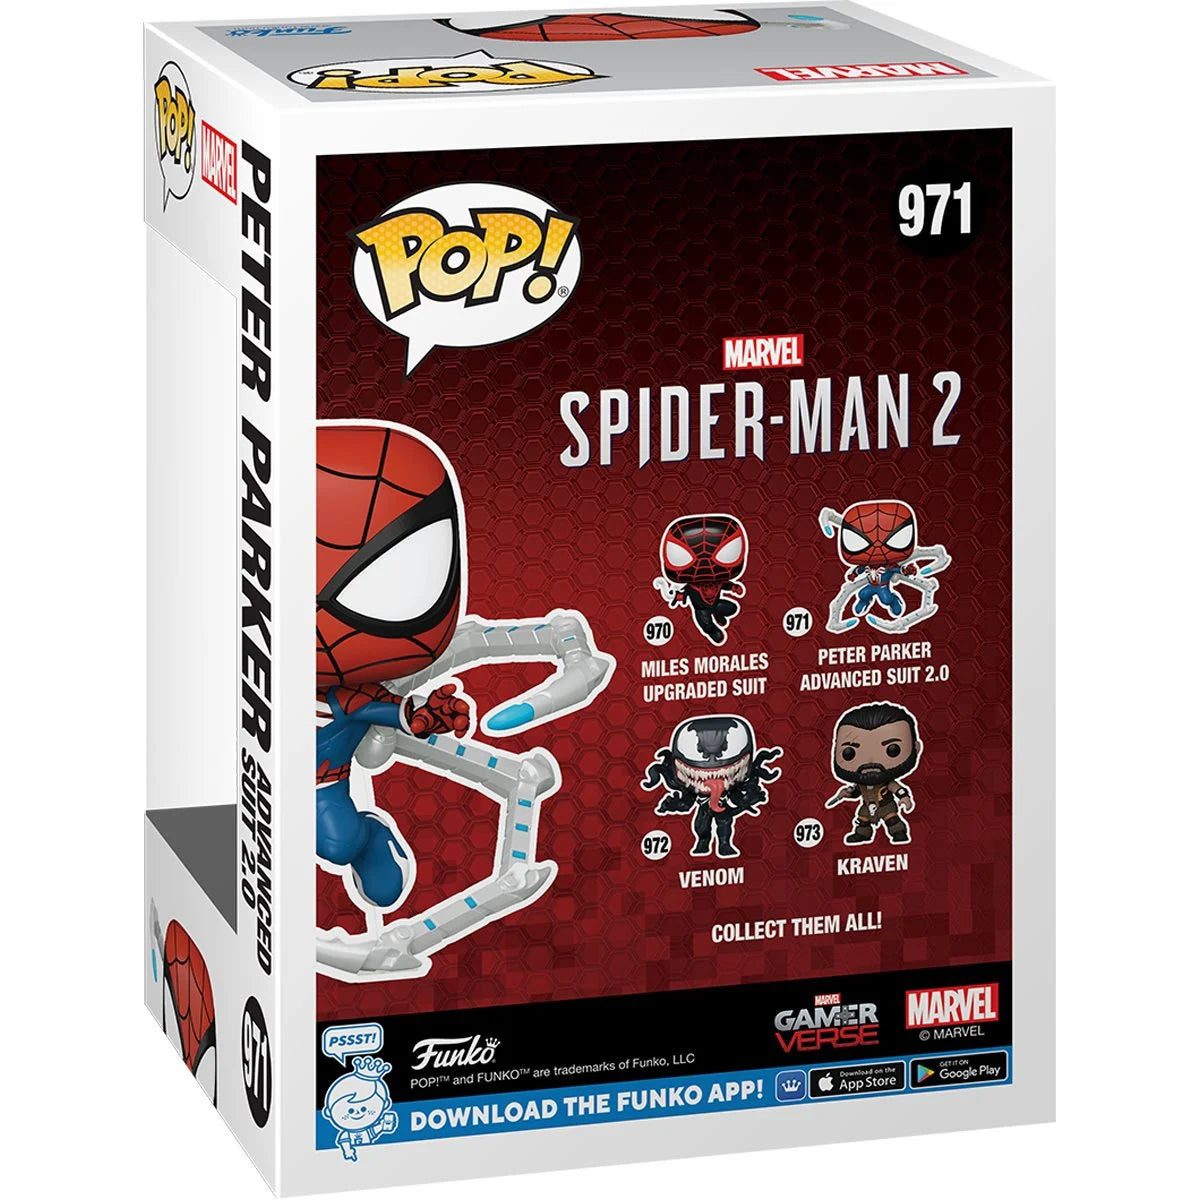 Funko Pop! Spider-Man 2 Game Peter Parker Advanced Suit 2.0 Vinyl Figure #971 